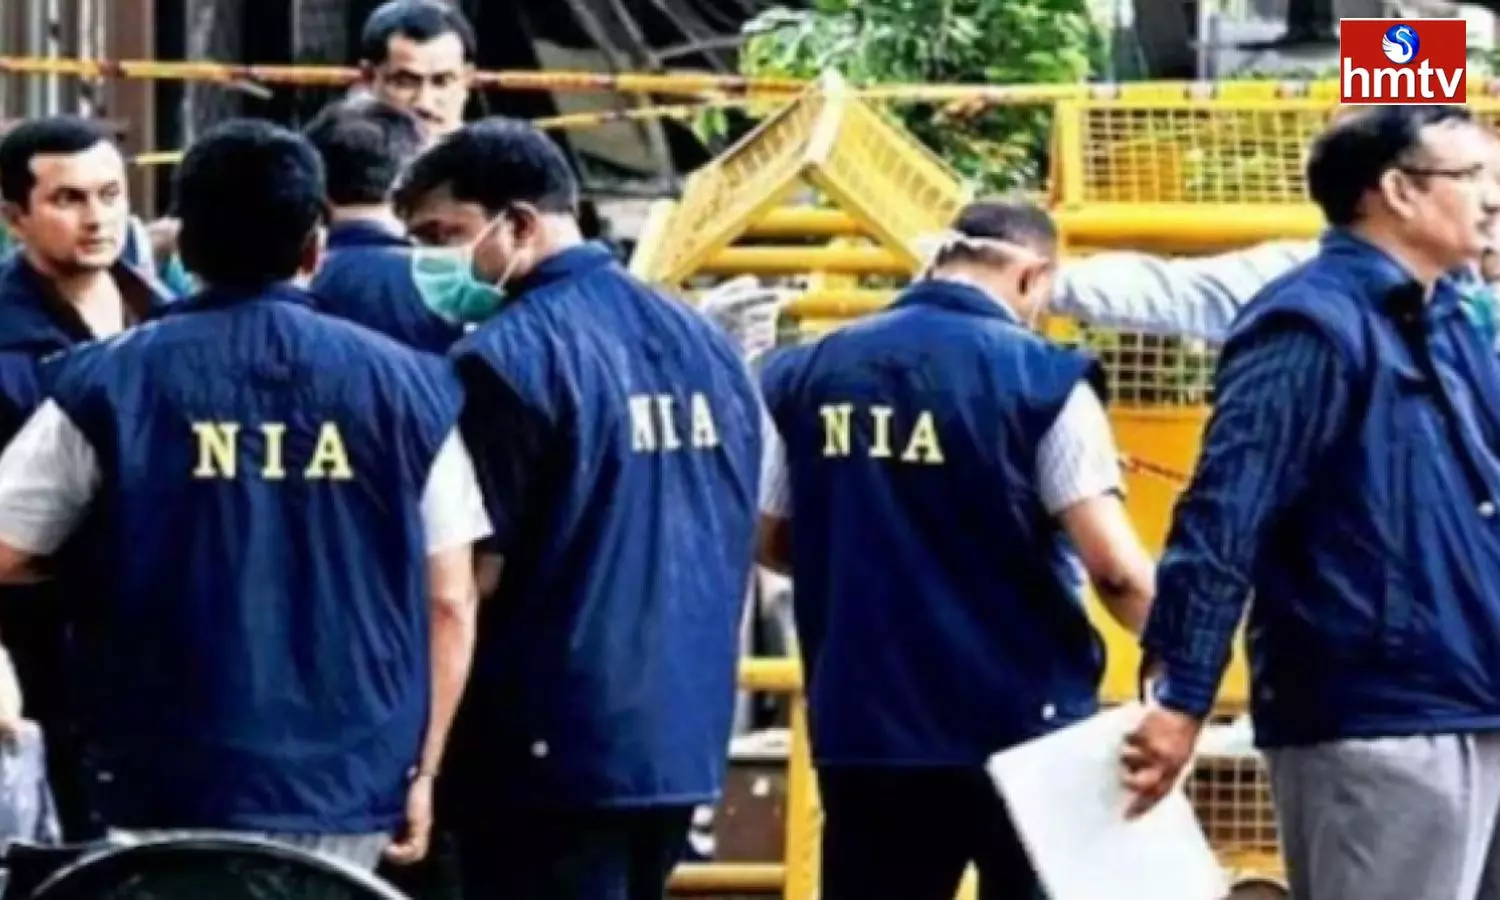 NIA Raids 17 locations across 7 states in Bengaluru